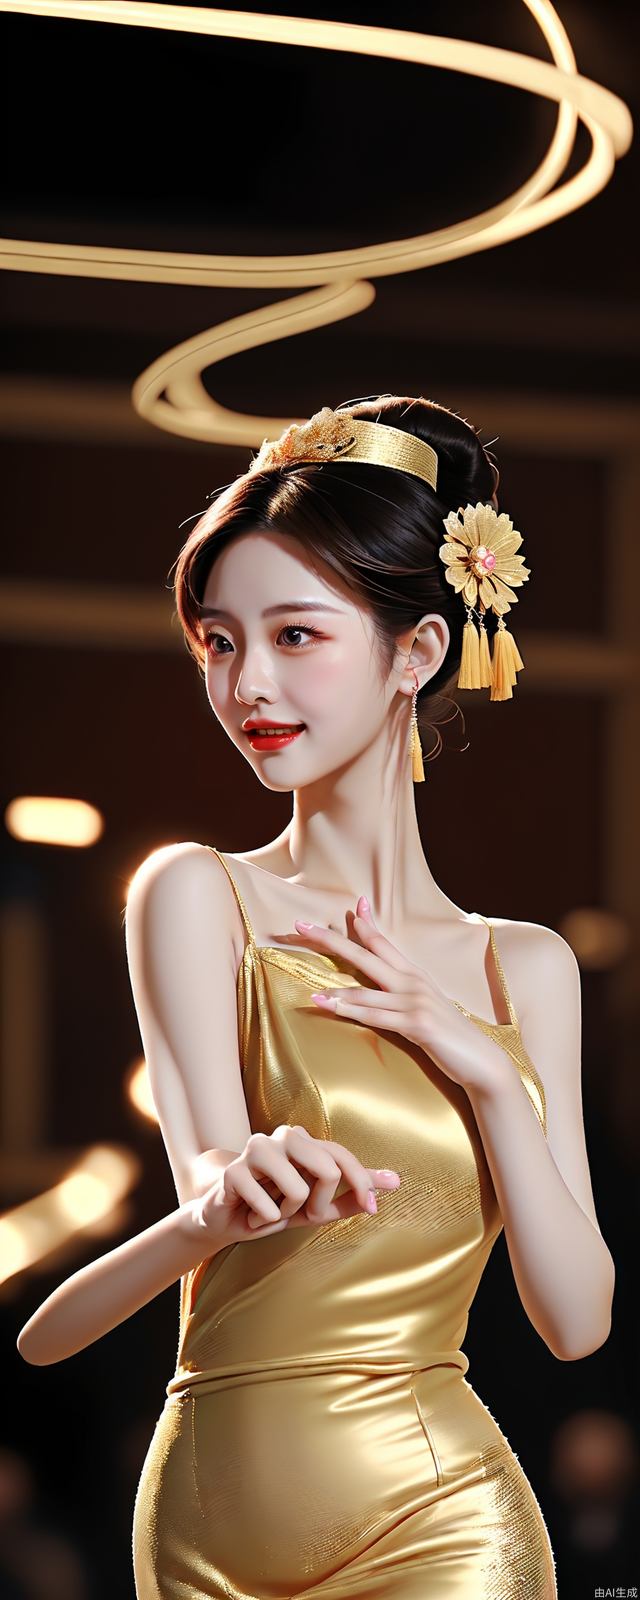 Chinese professional woman, long dress, upper body, golden lights, dance scene, elegant posture, Chinese style, elegant temperament, happy